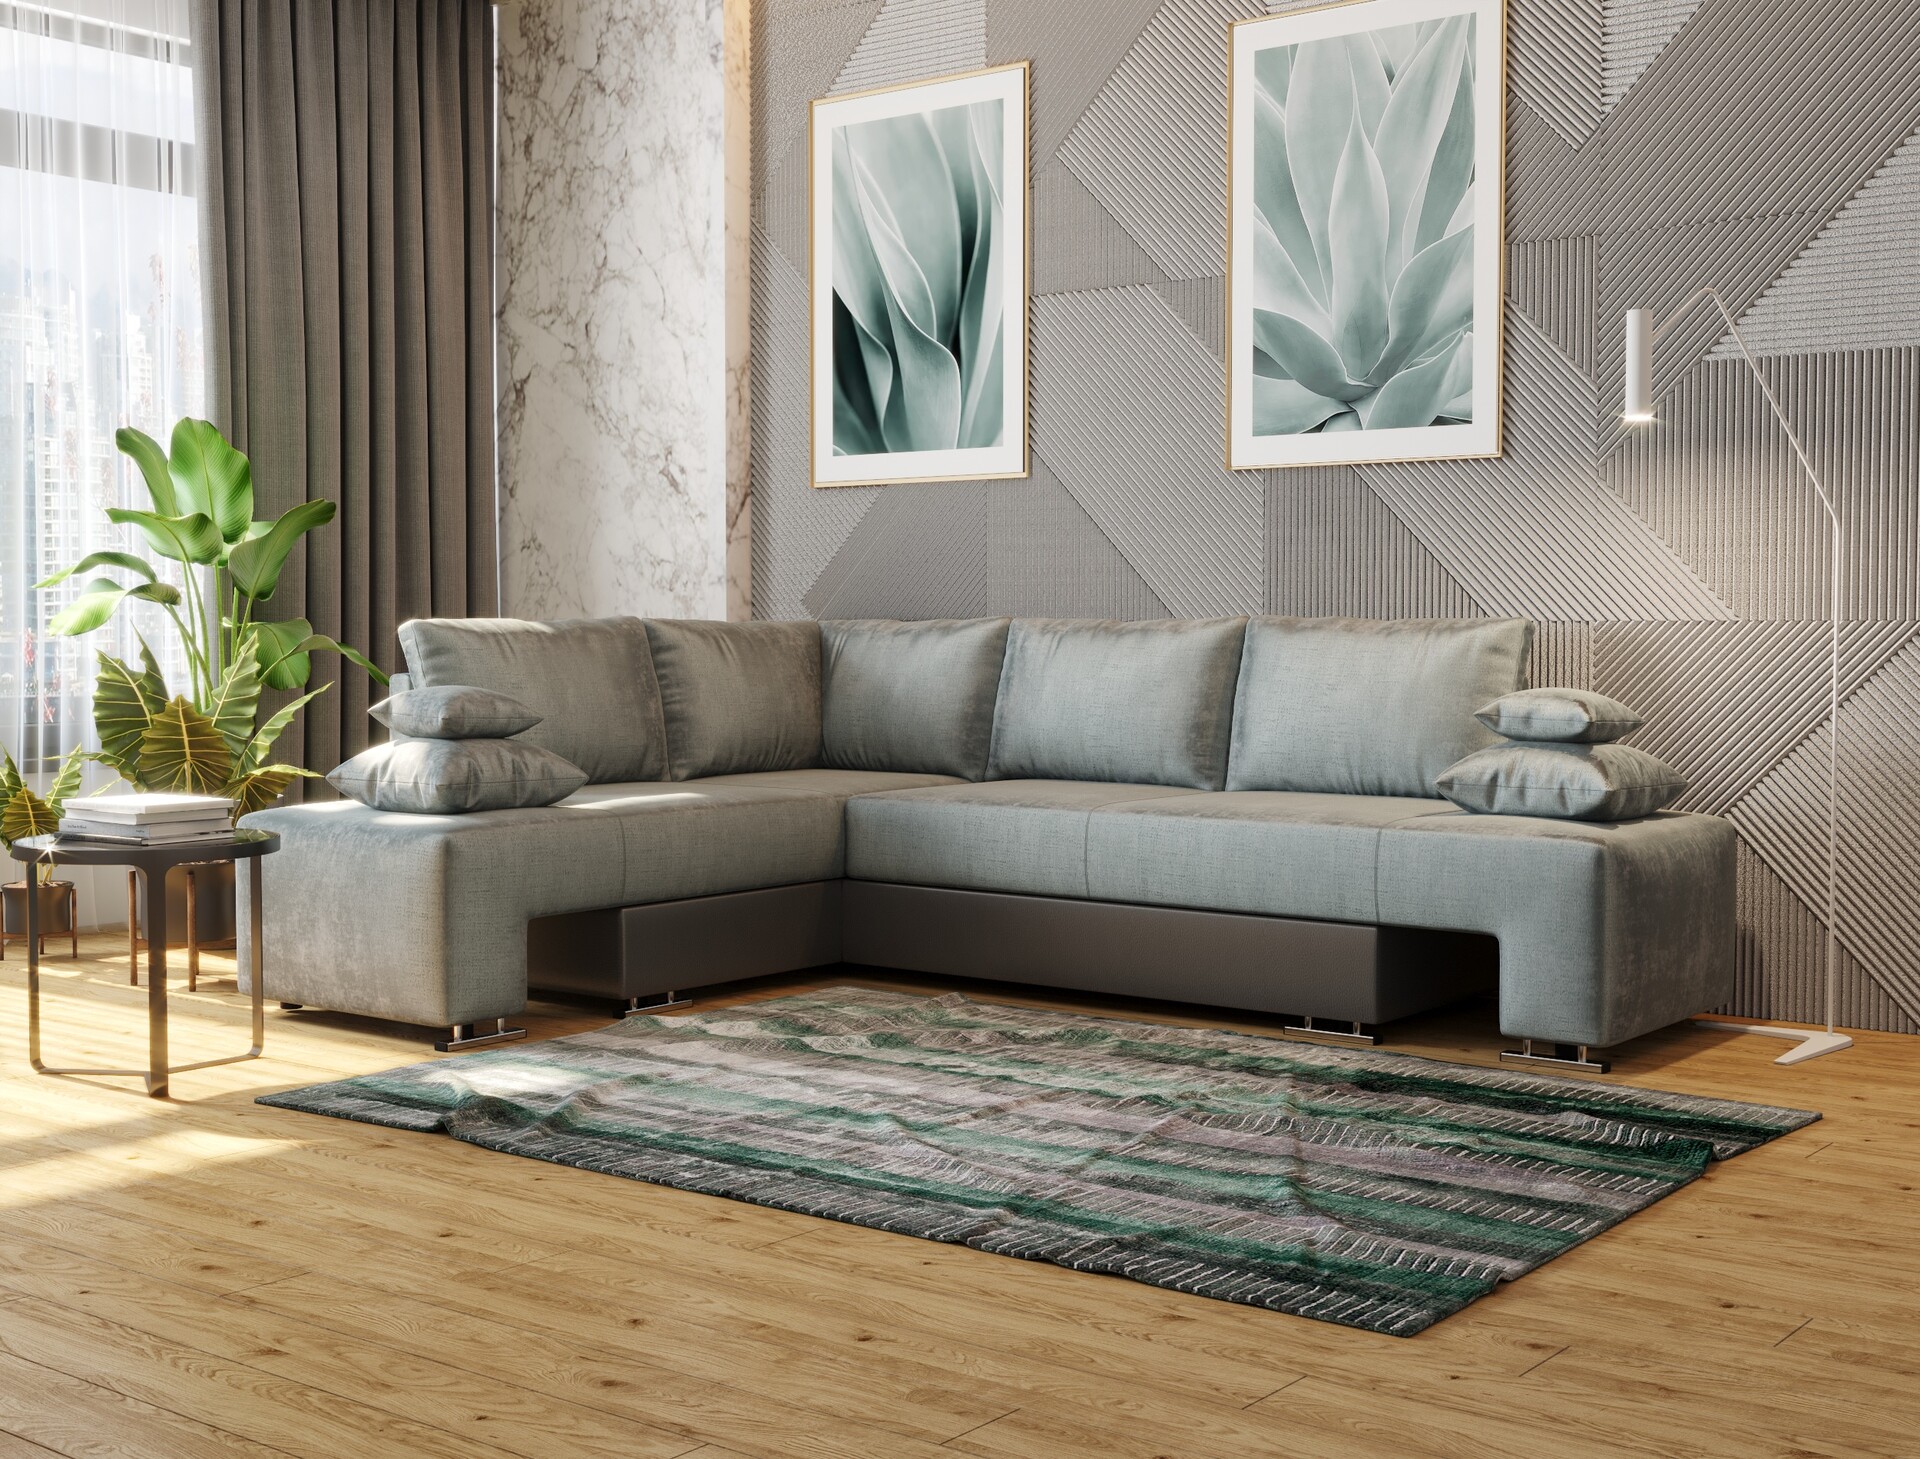 ArtStation - Visualization of furniture in the interior